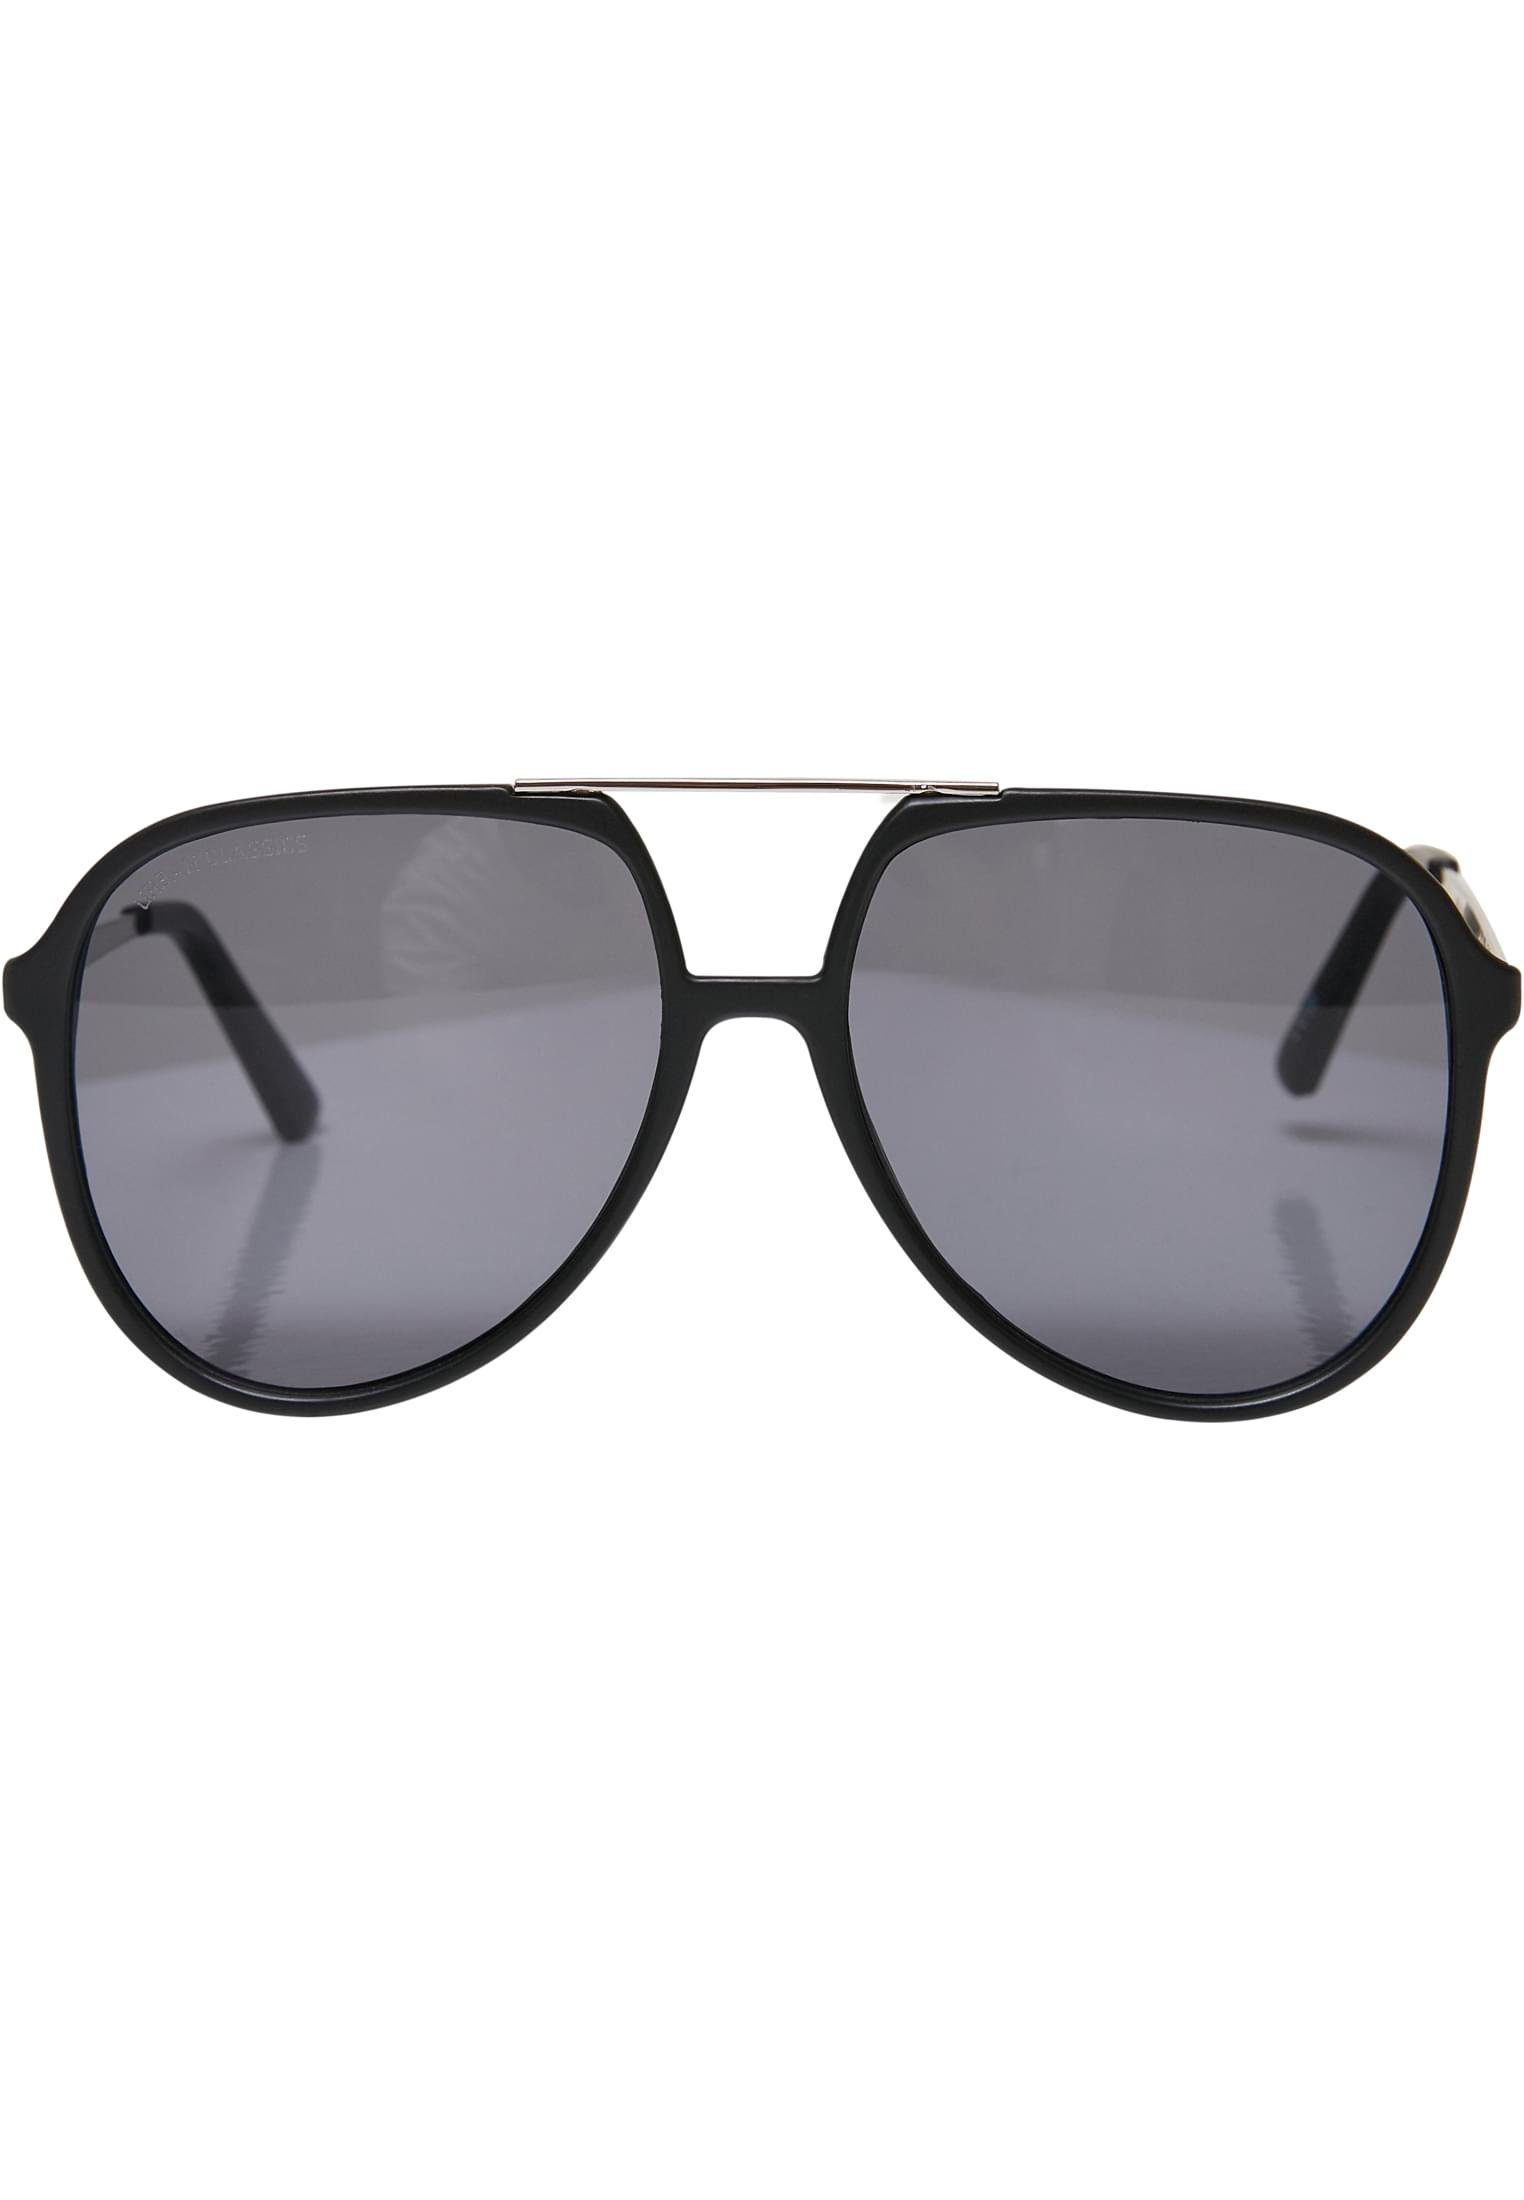 Sonnenbrille CLASSICS URBAN Sunglasses Osaka Unisex black/silver